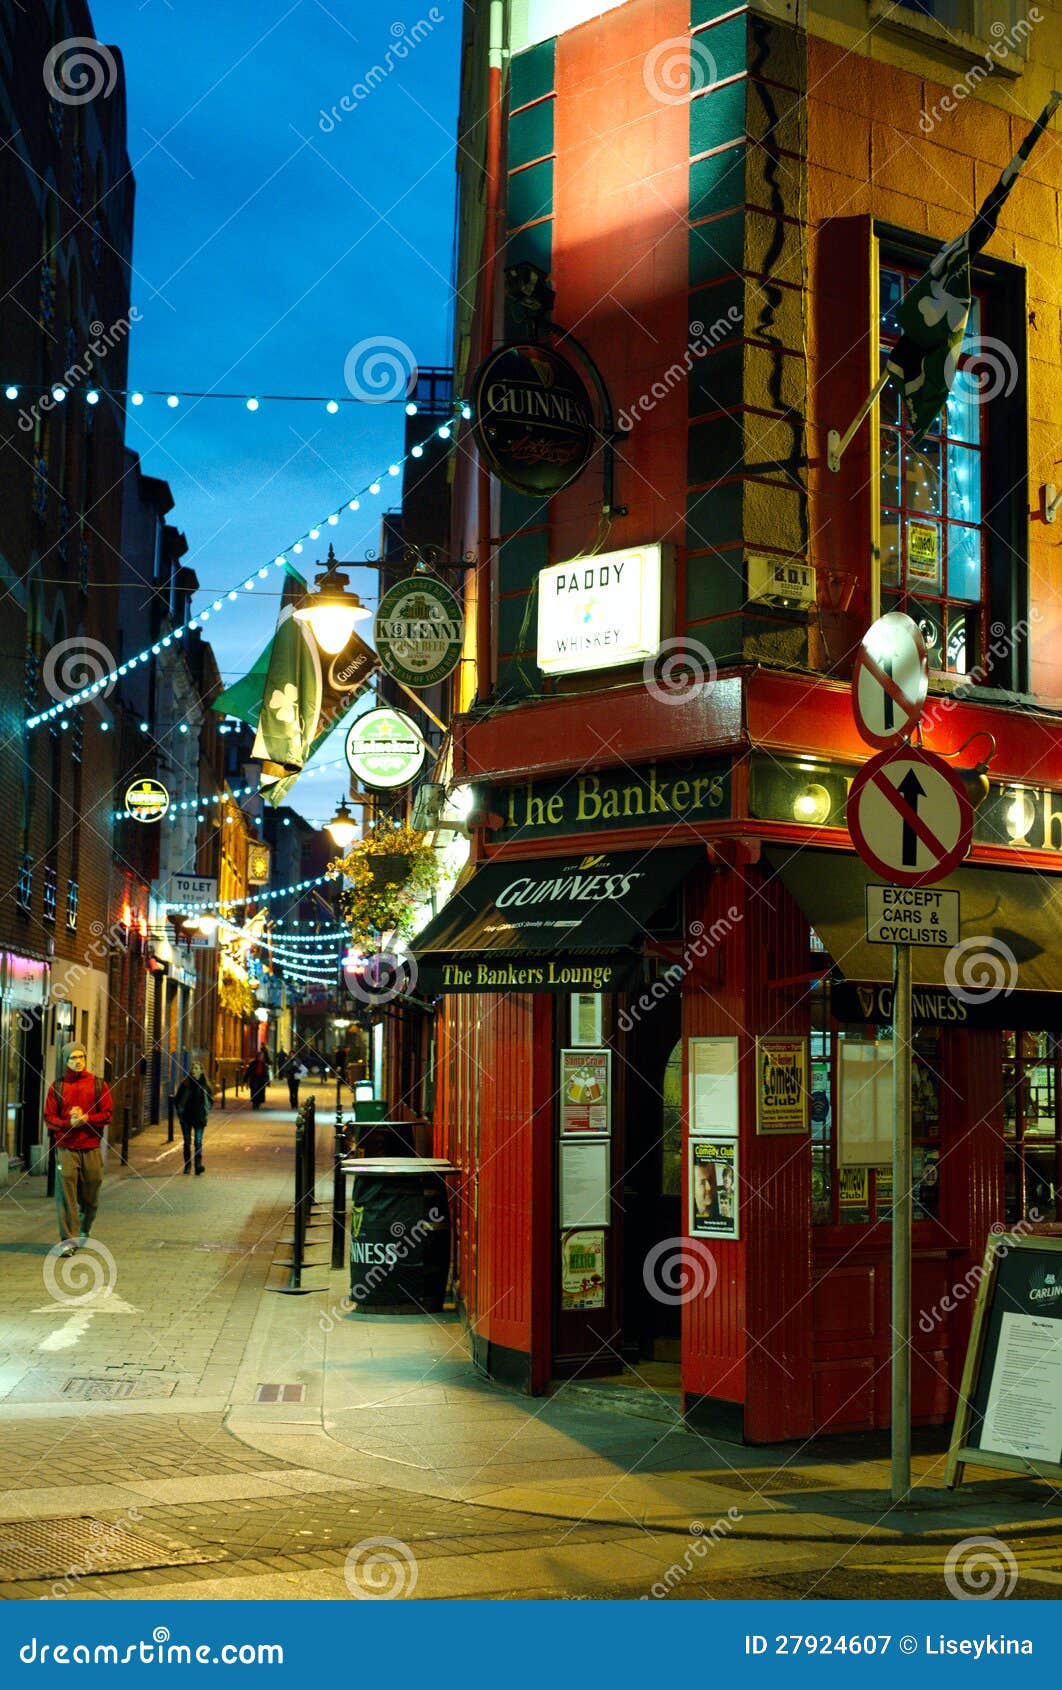  Temple  Bar  Area  In Dublin  Ireland  Editorial Photography 